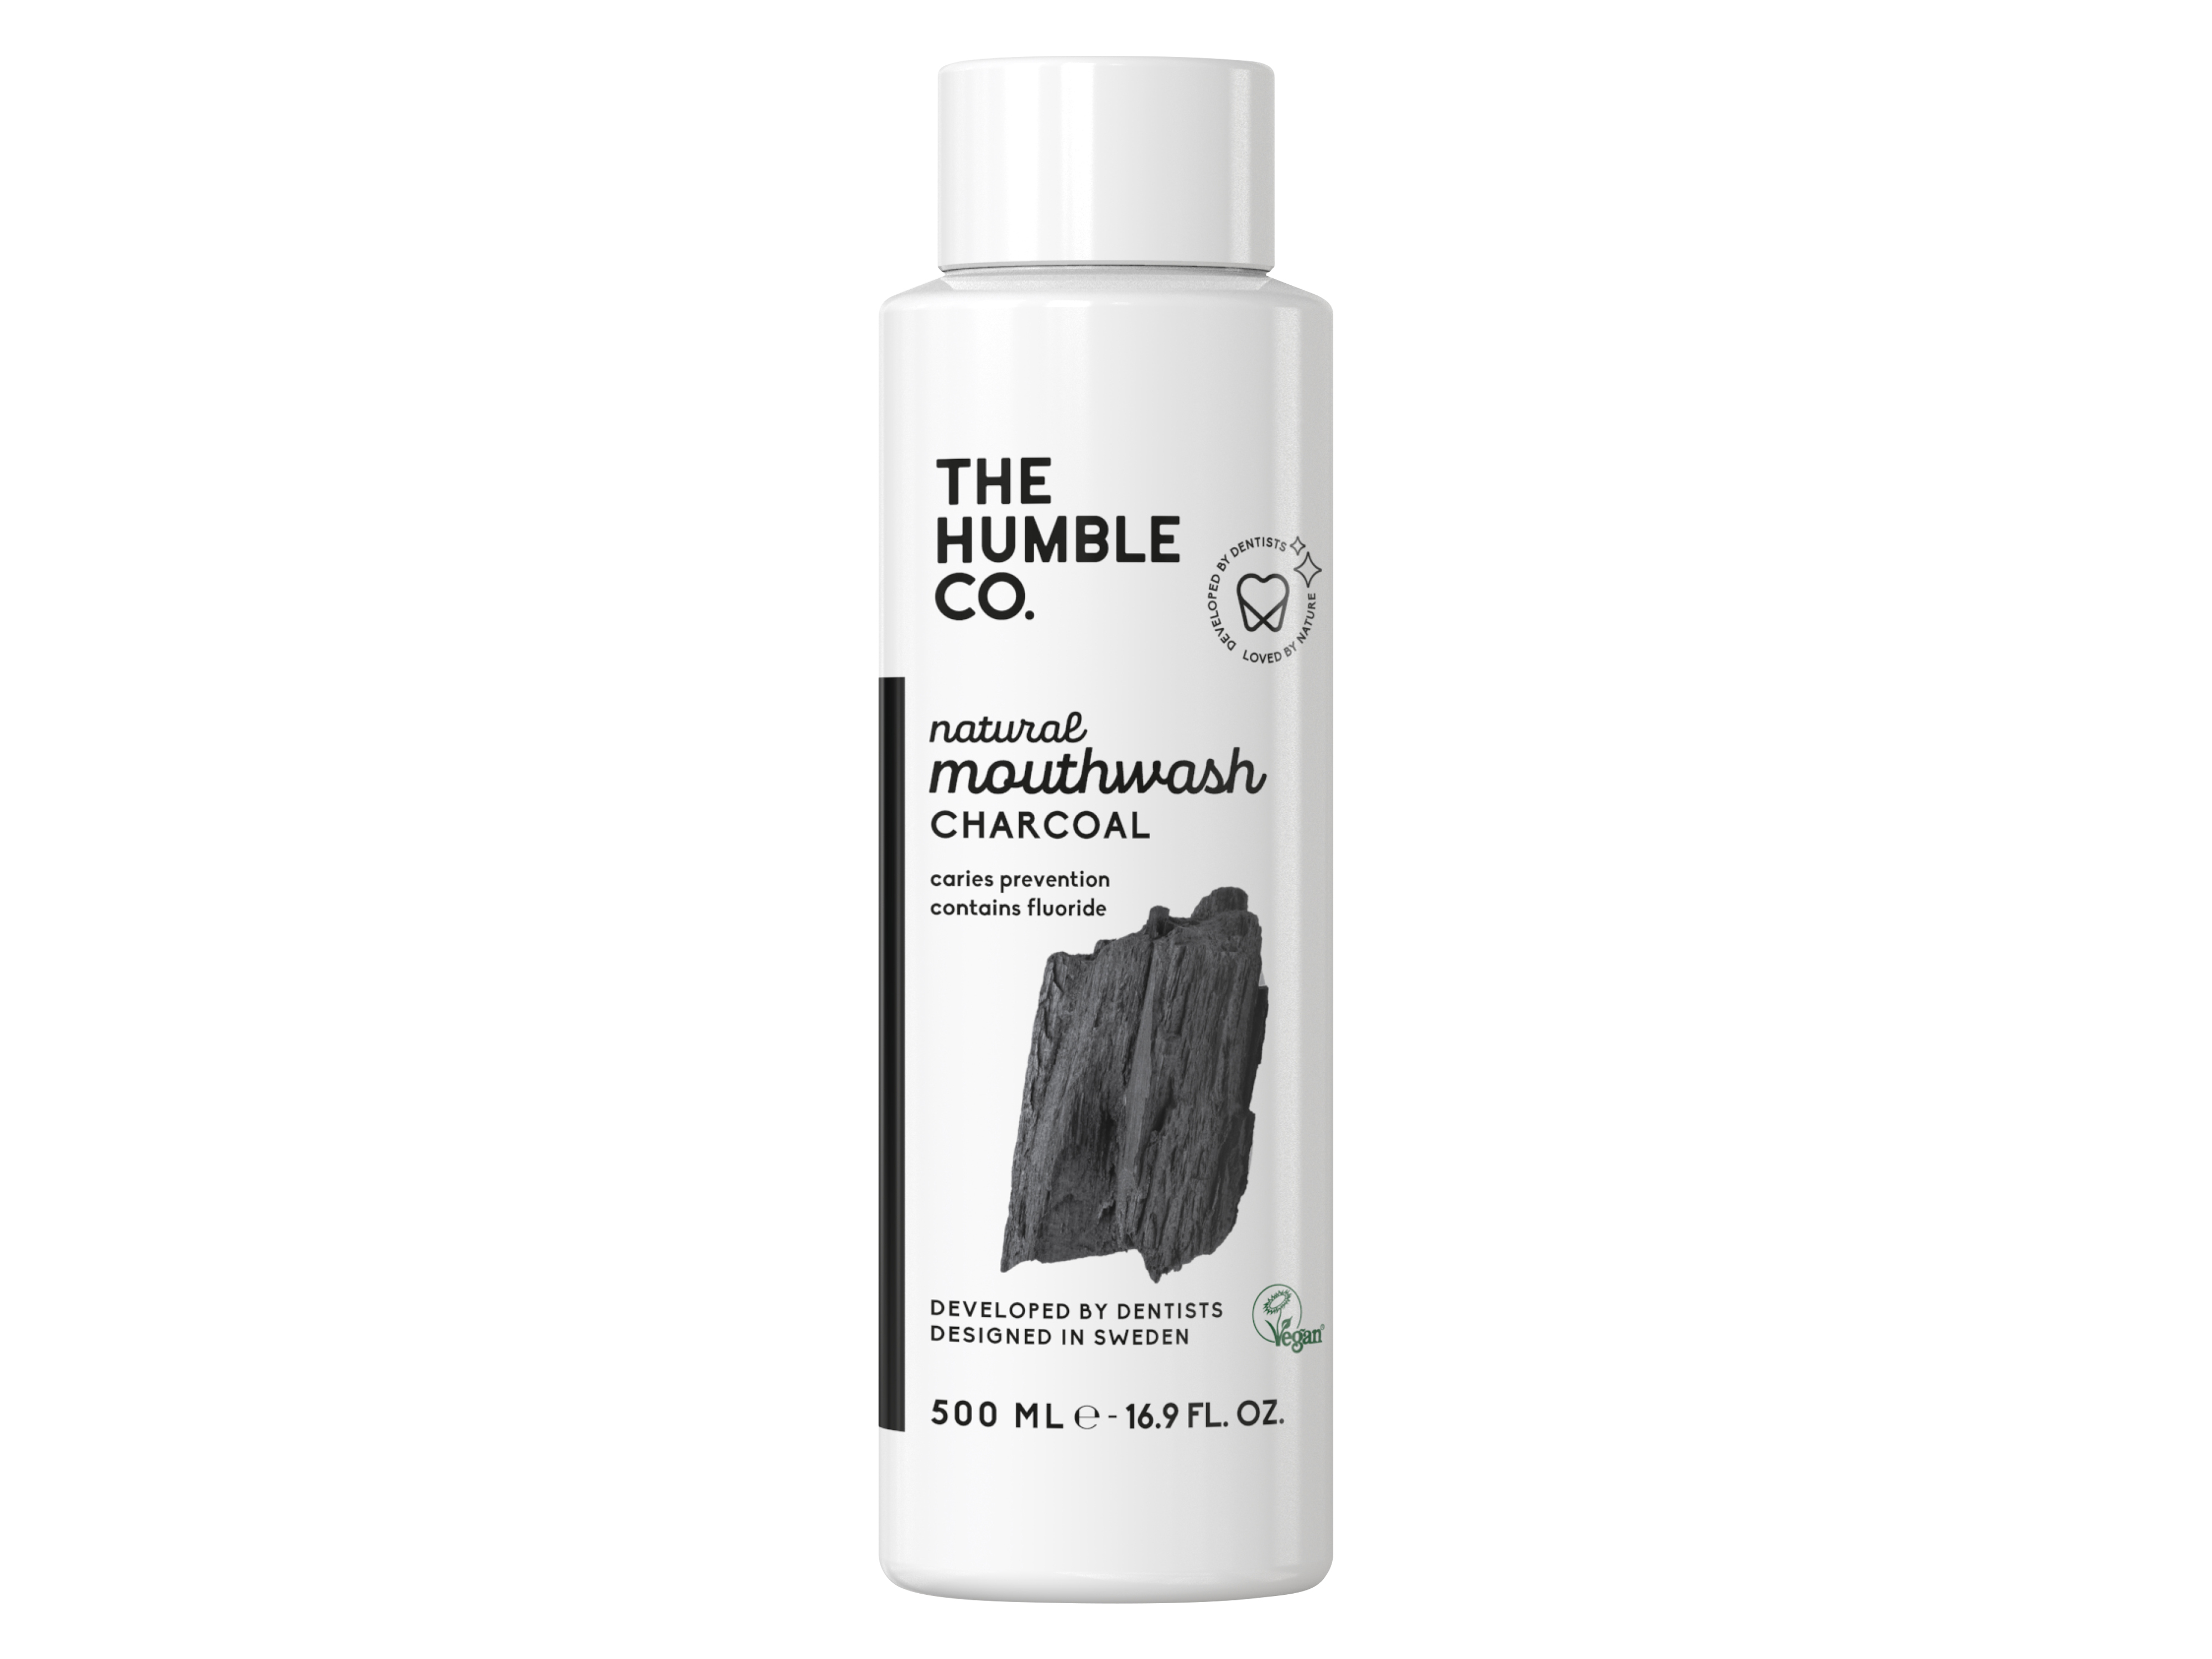 The Humble Co. Humble Natural Mouthwash Charcoal, 500